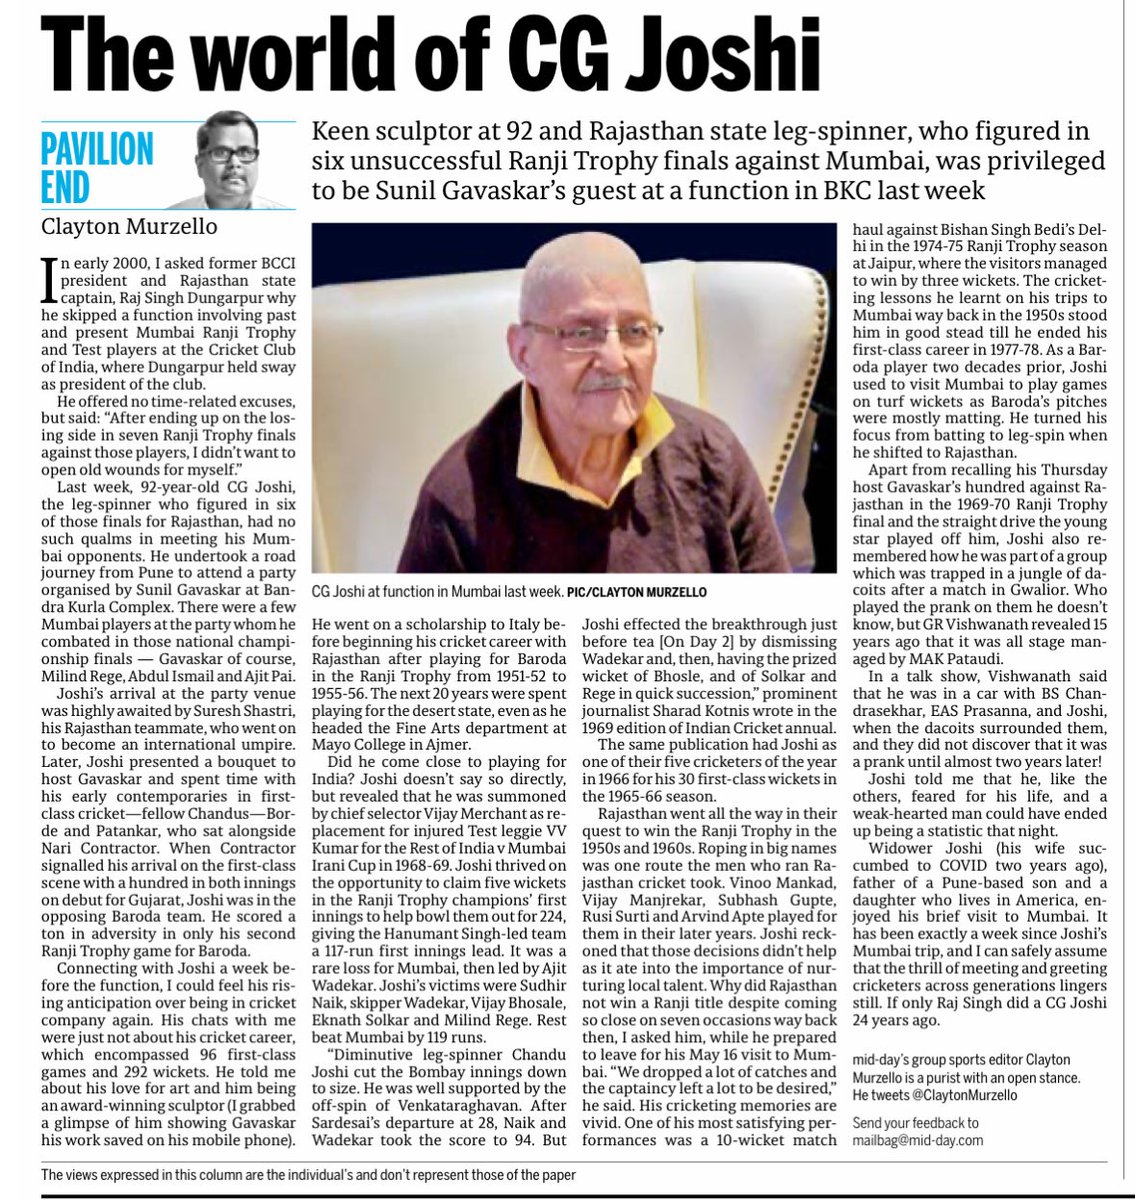 My piece on Chandu Joshi - Prof, sculptor and in Sunil Gavaskar’s words, a feisty leg-spinner in today’s @mid_day